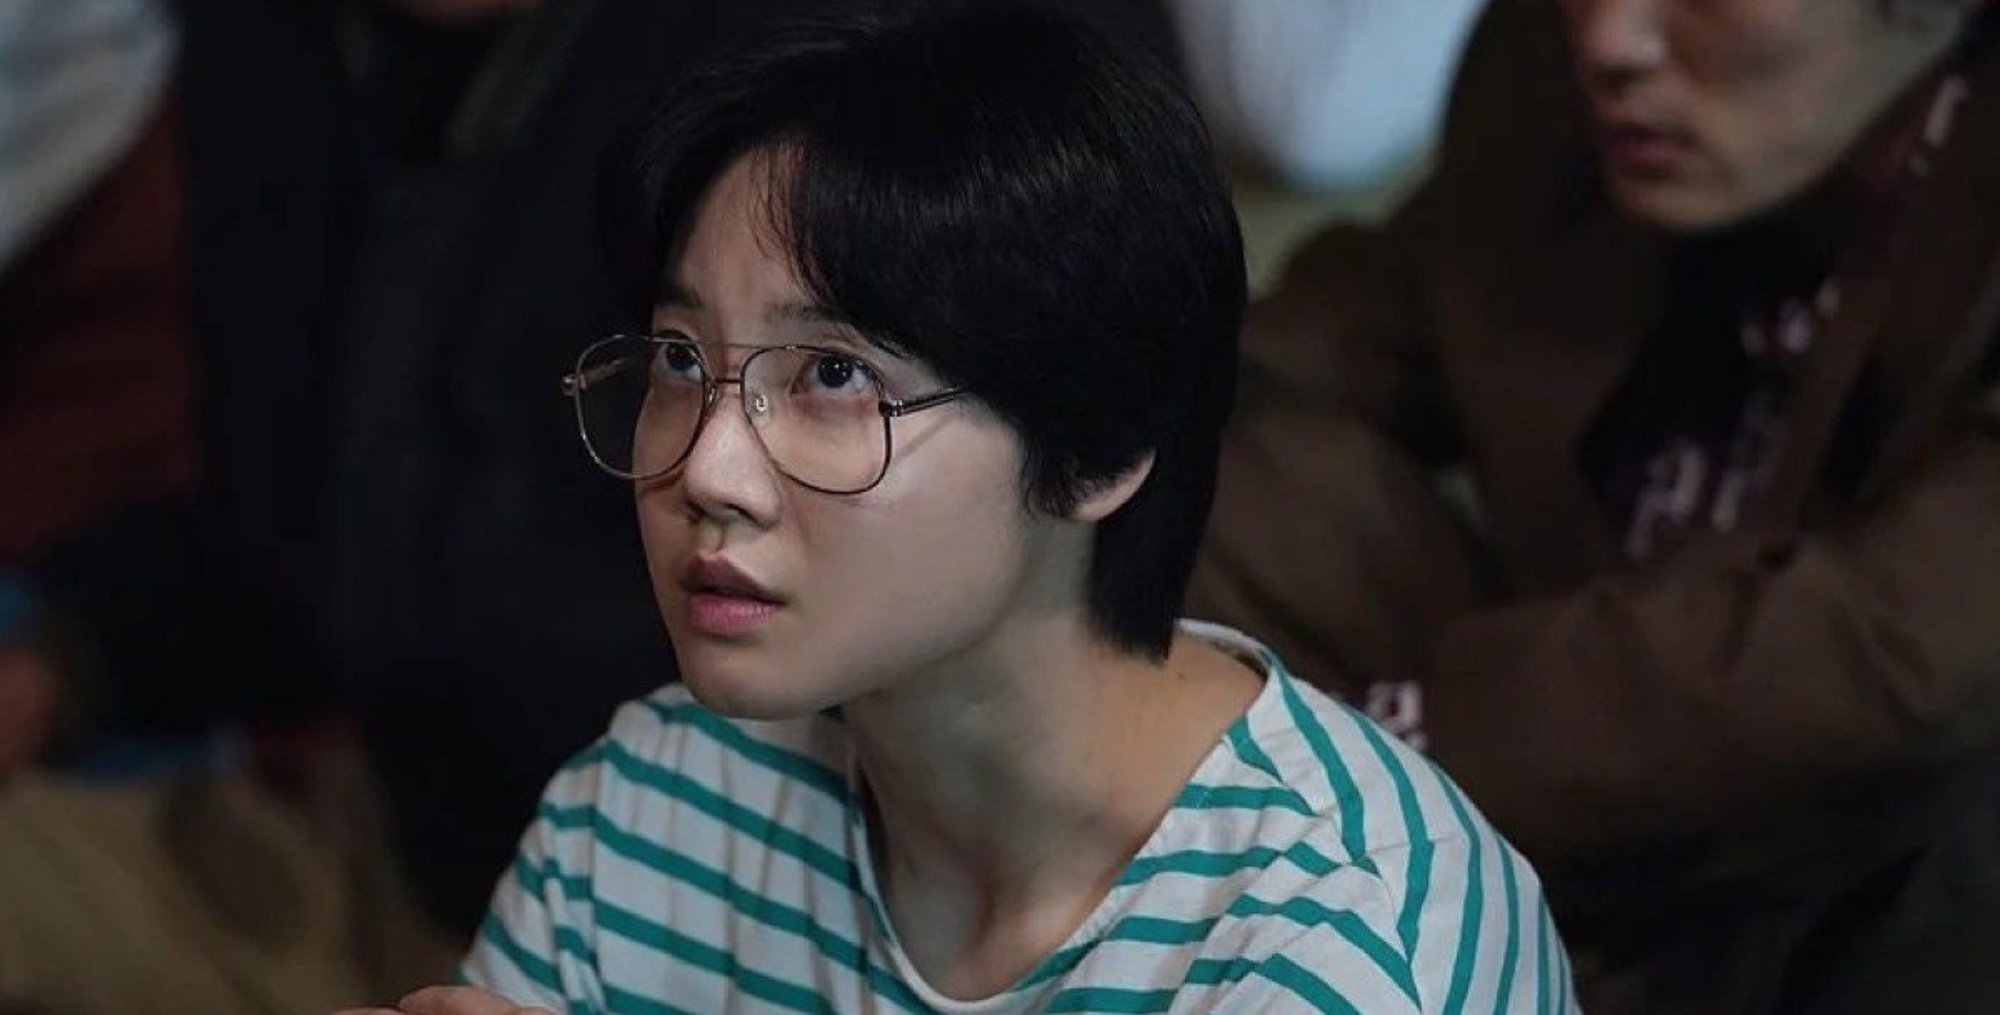 Actor Kim Mi-soo in 'Snowdrop' wearing green striped shirt.